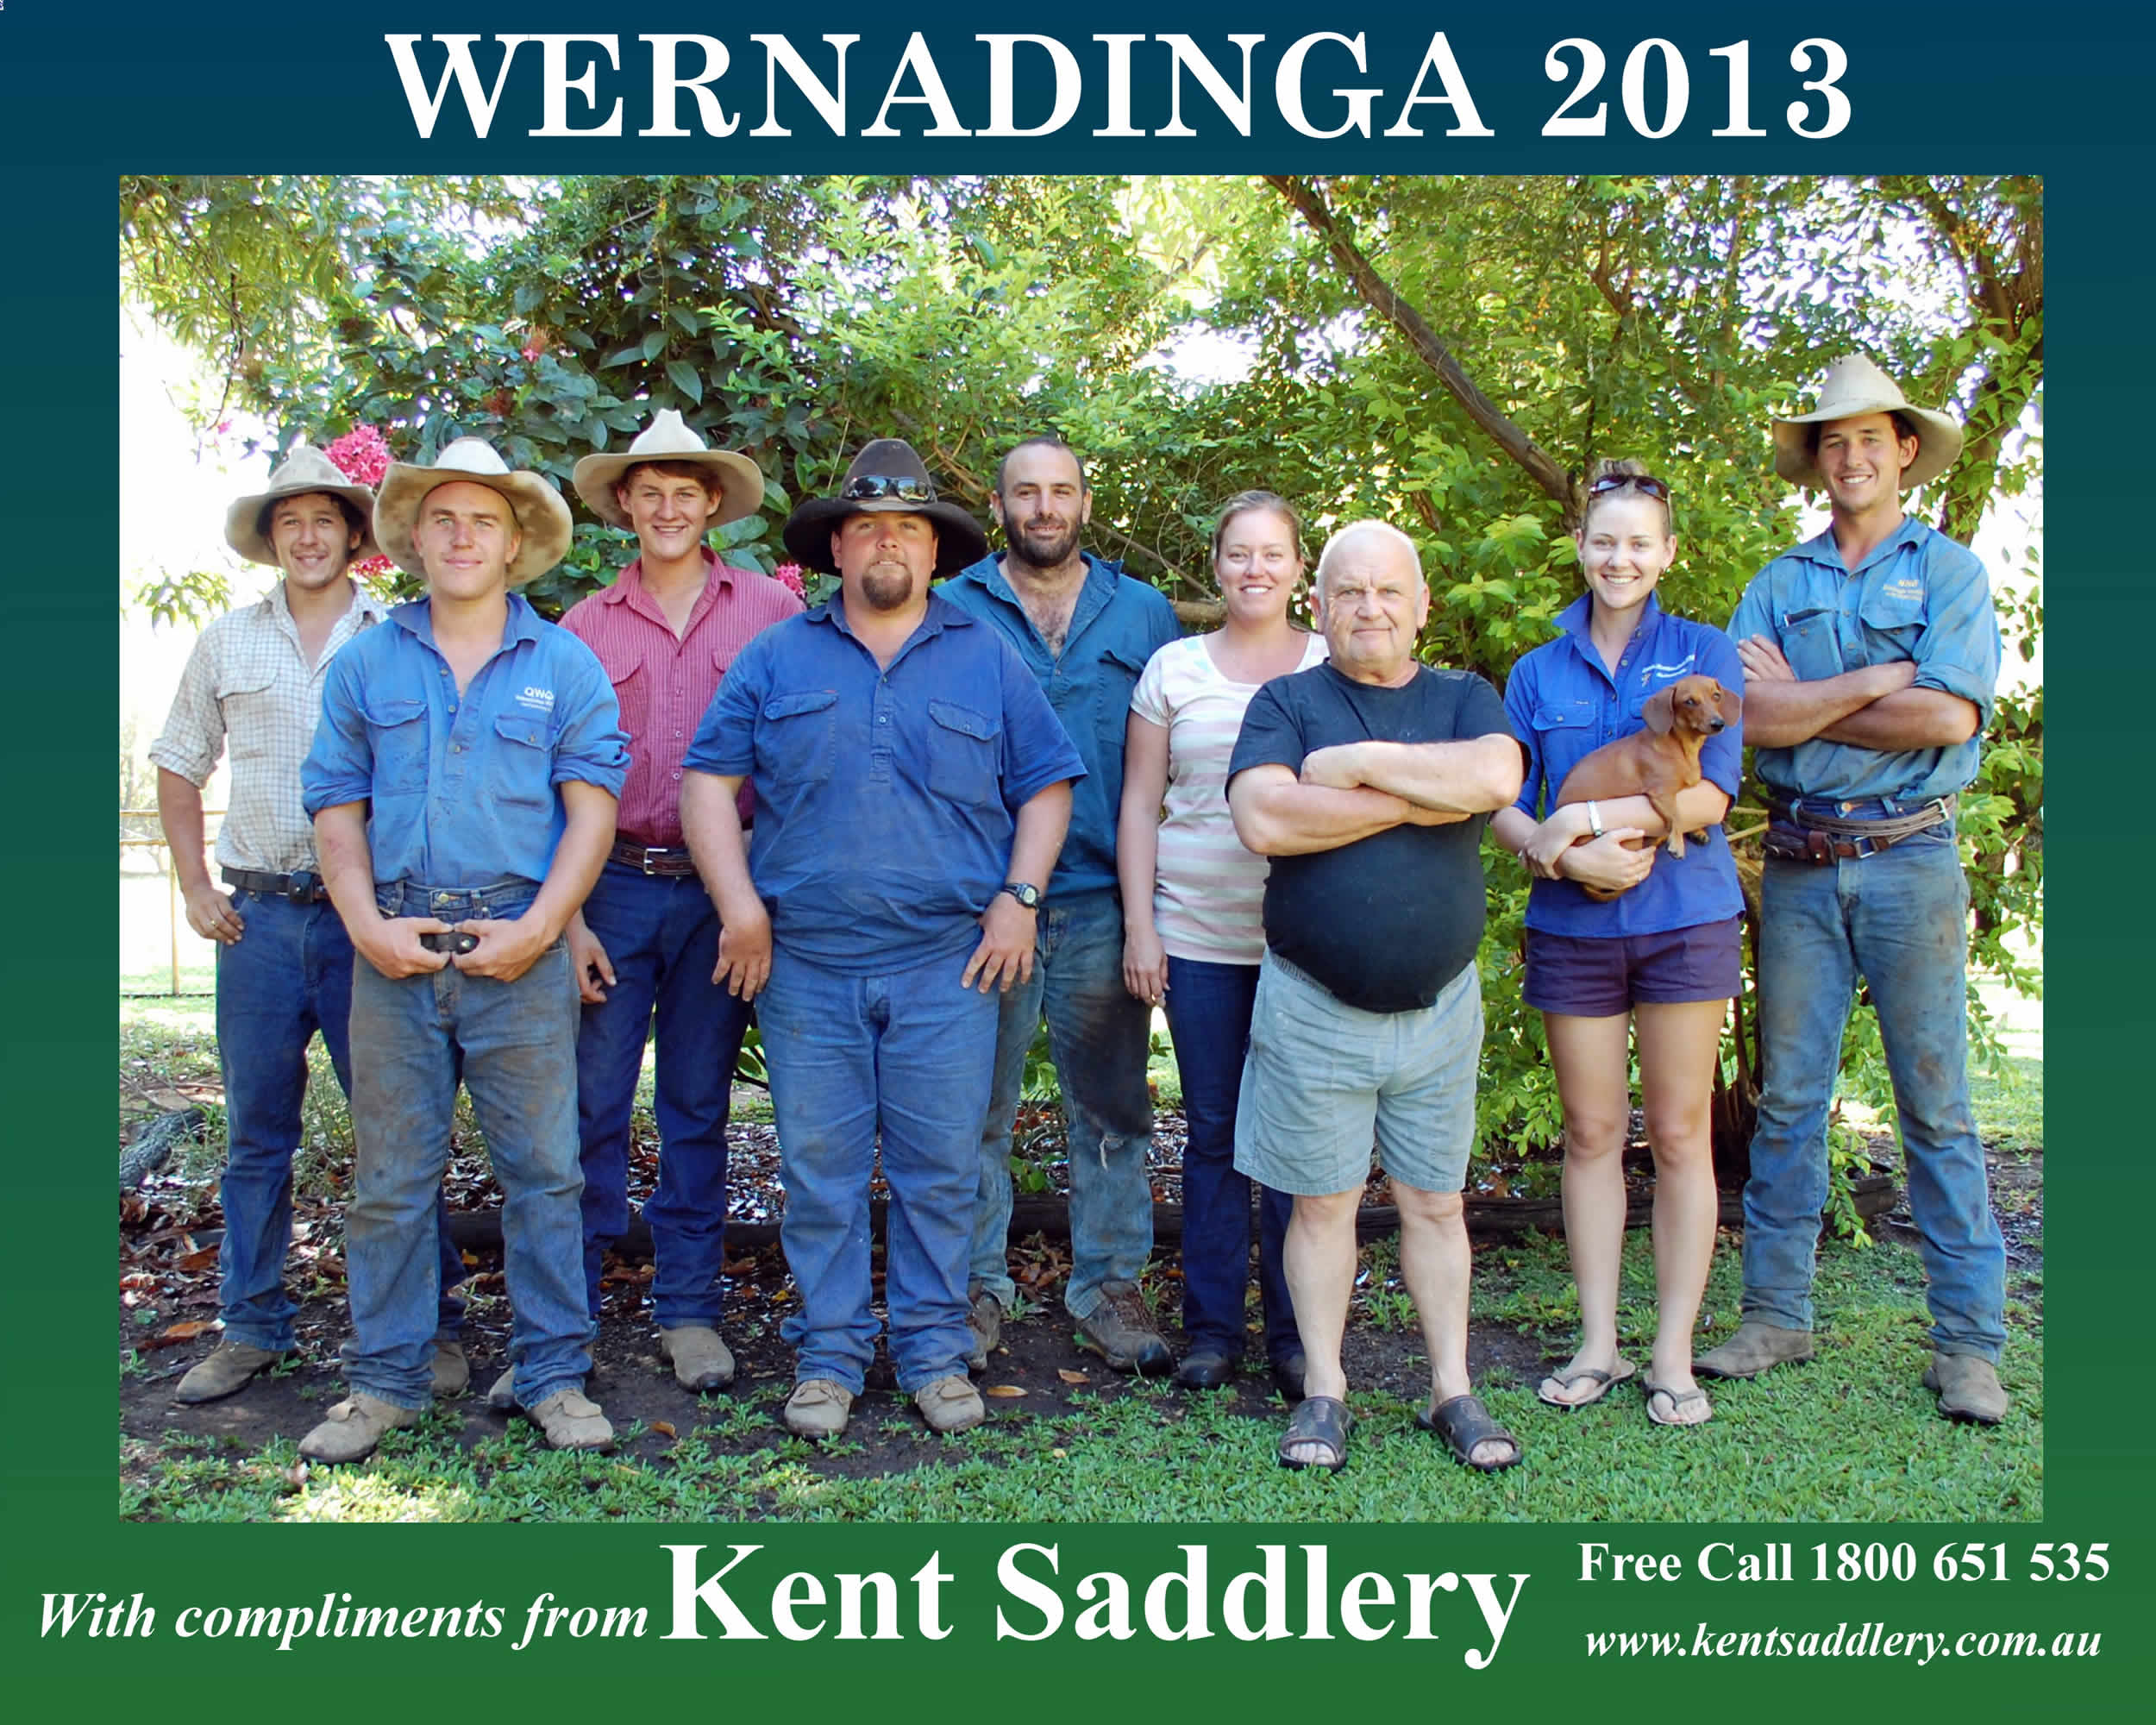 Queensland - Wernadinga 21